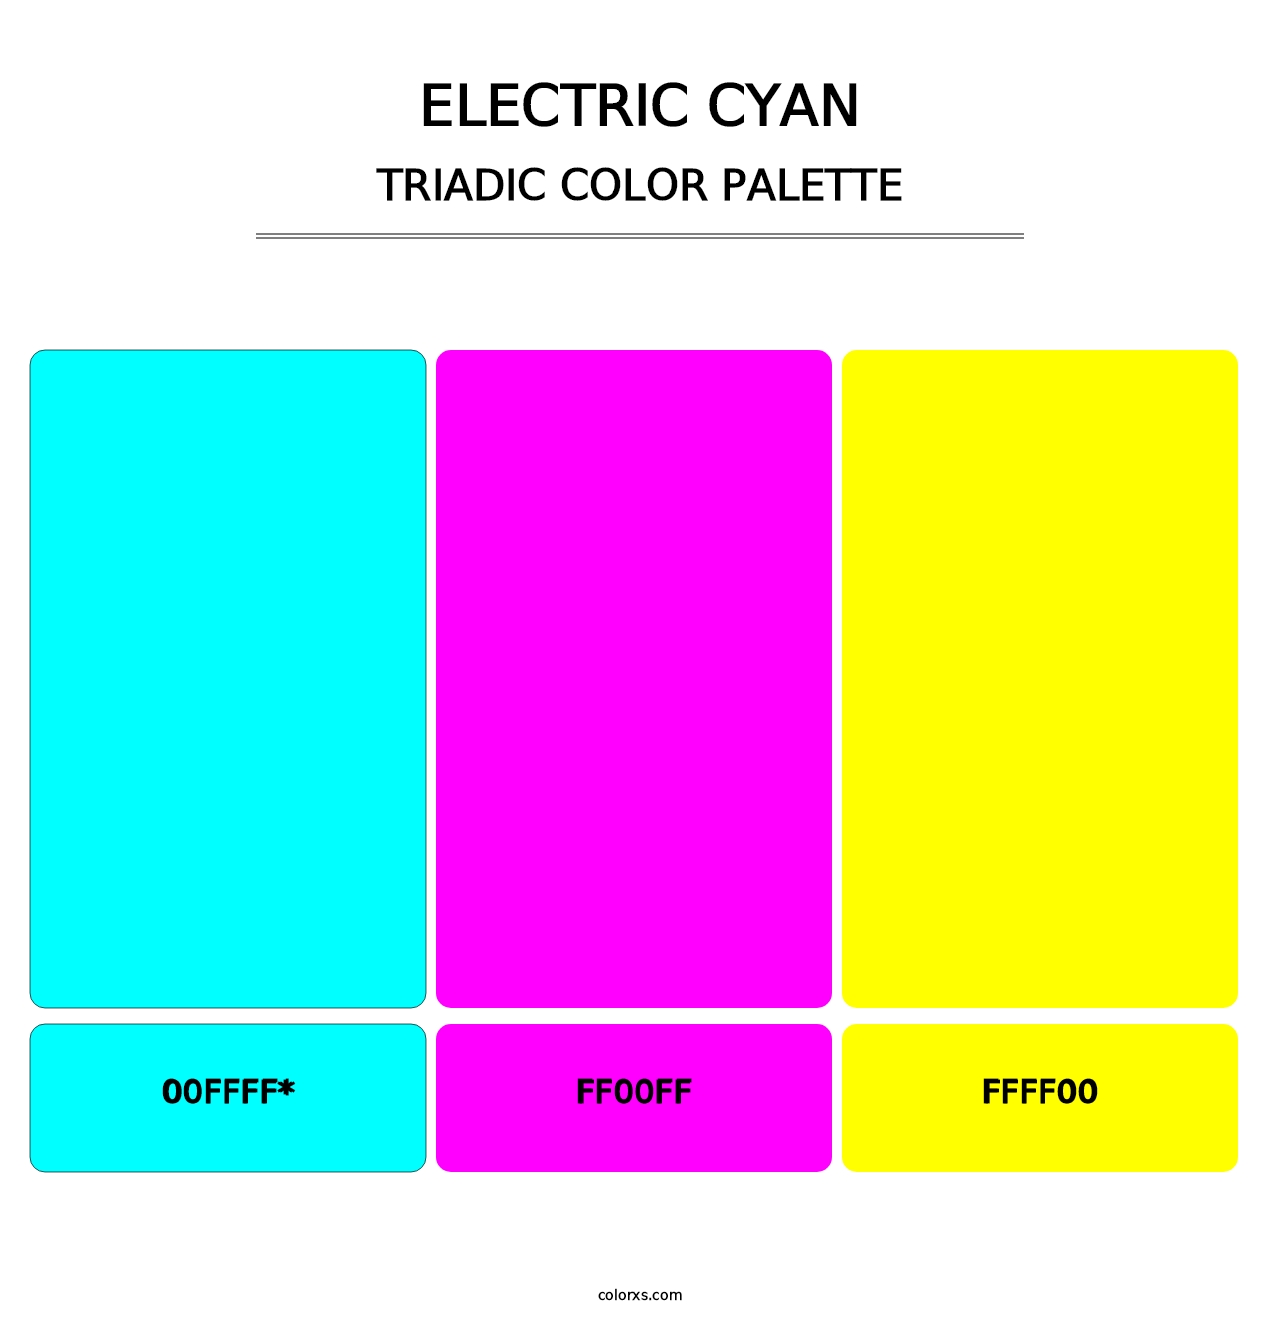 Electric Cyan - Triadic Color Palette